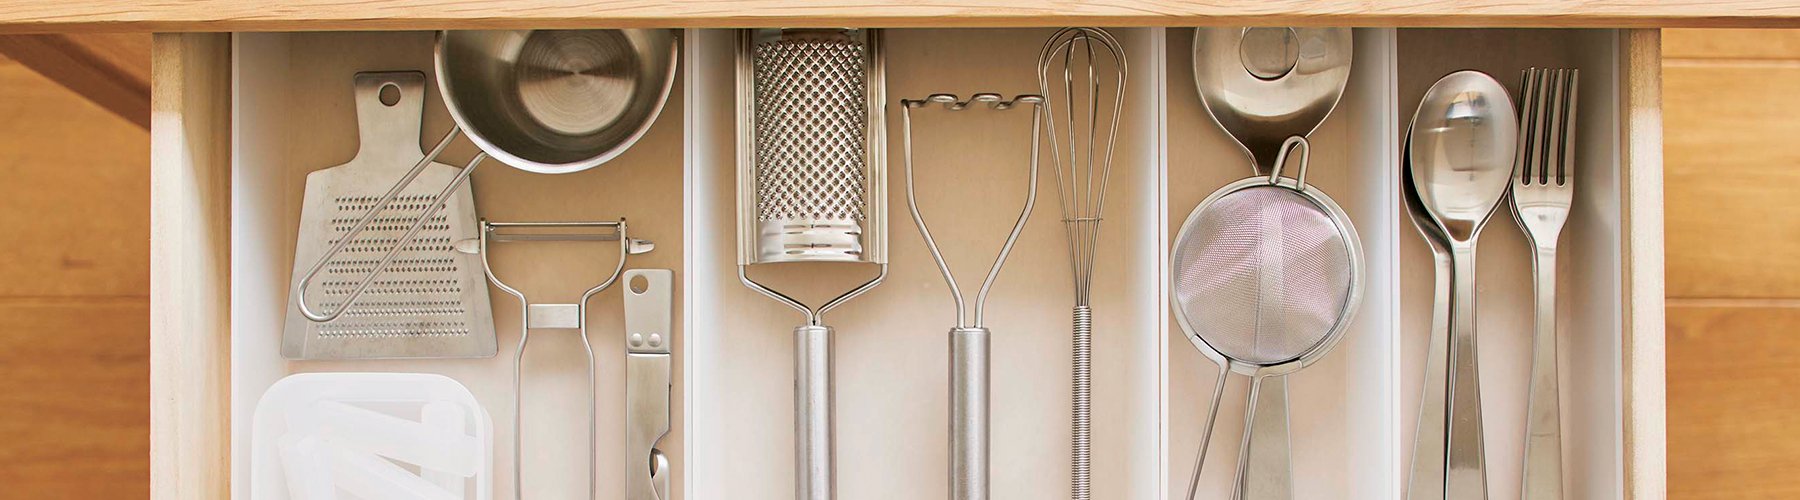 Stainless Steel Long Measure Spoon | Kitchen Utensils | MUJI USA Small (5ml)